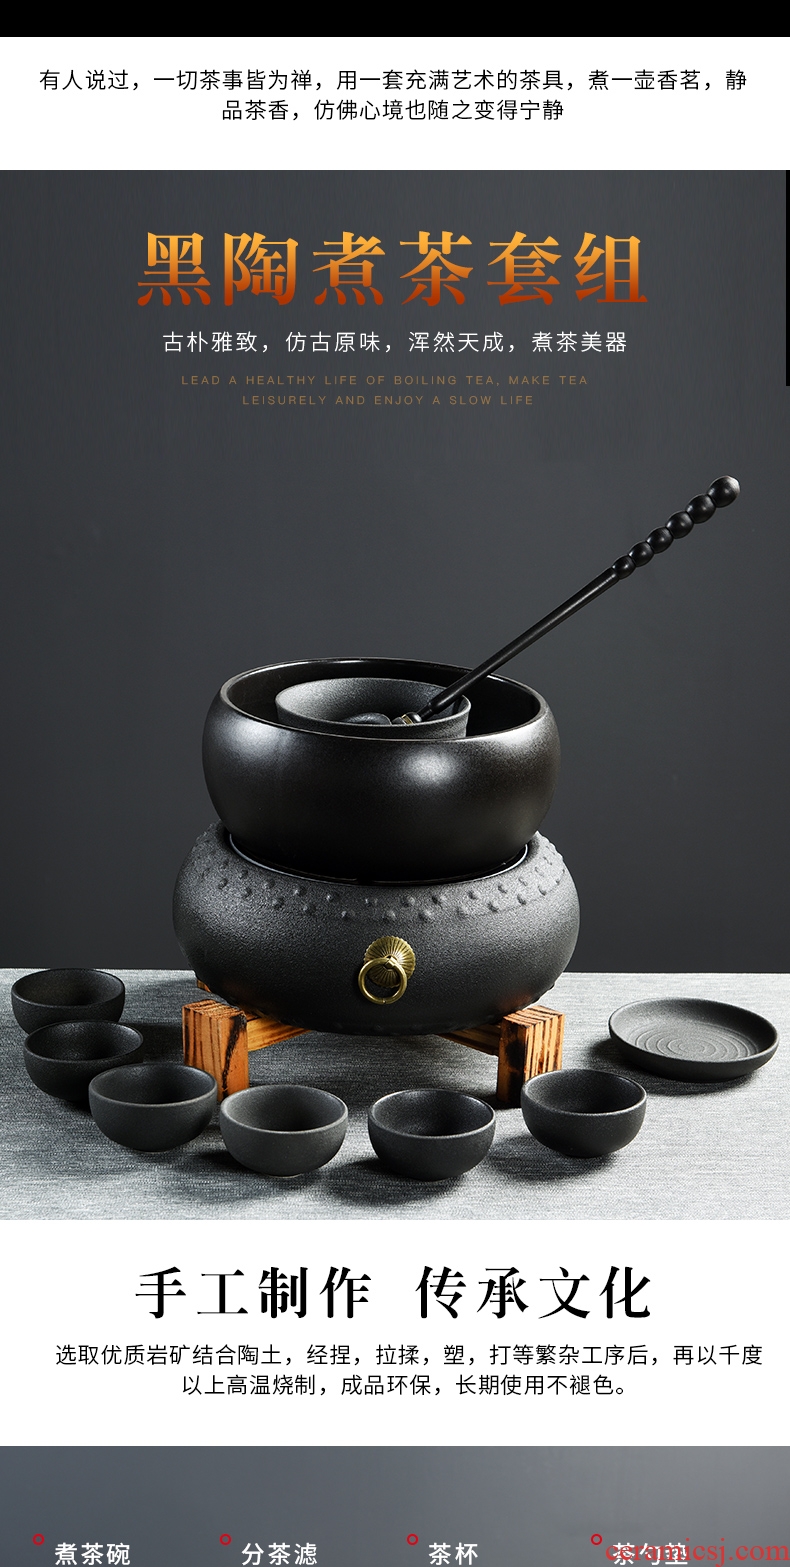 Porcelain ceramic cooked pu 'er tea is black and white tea god ancient tea set TaoLu home burn boiling kettle electric electricity